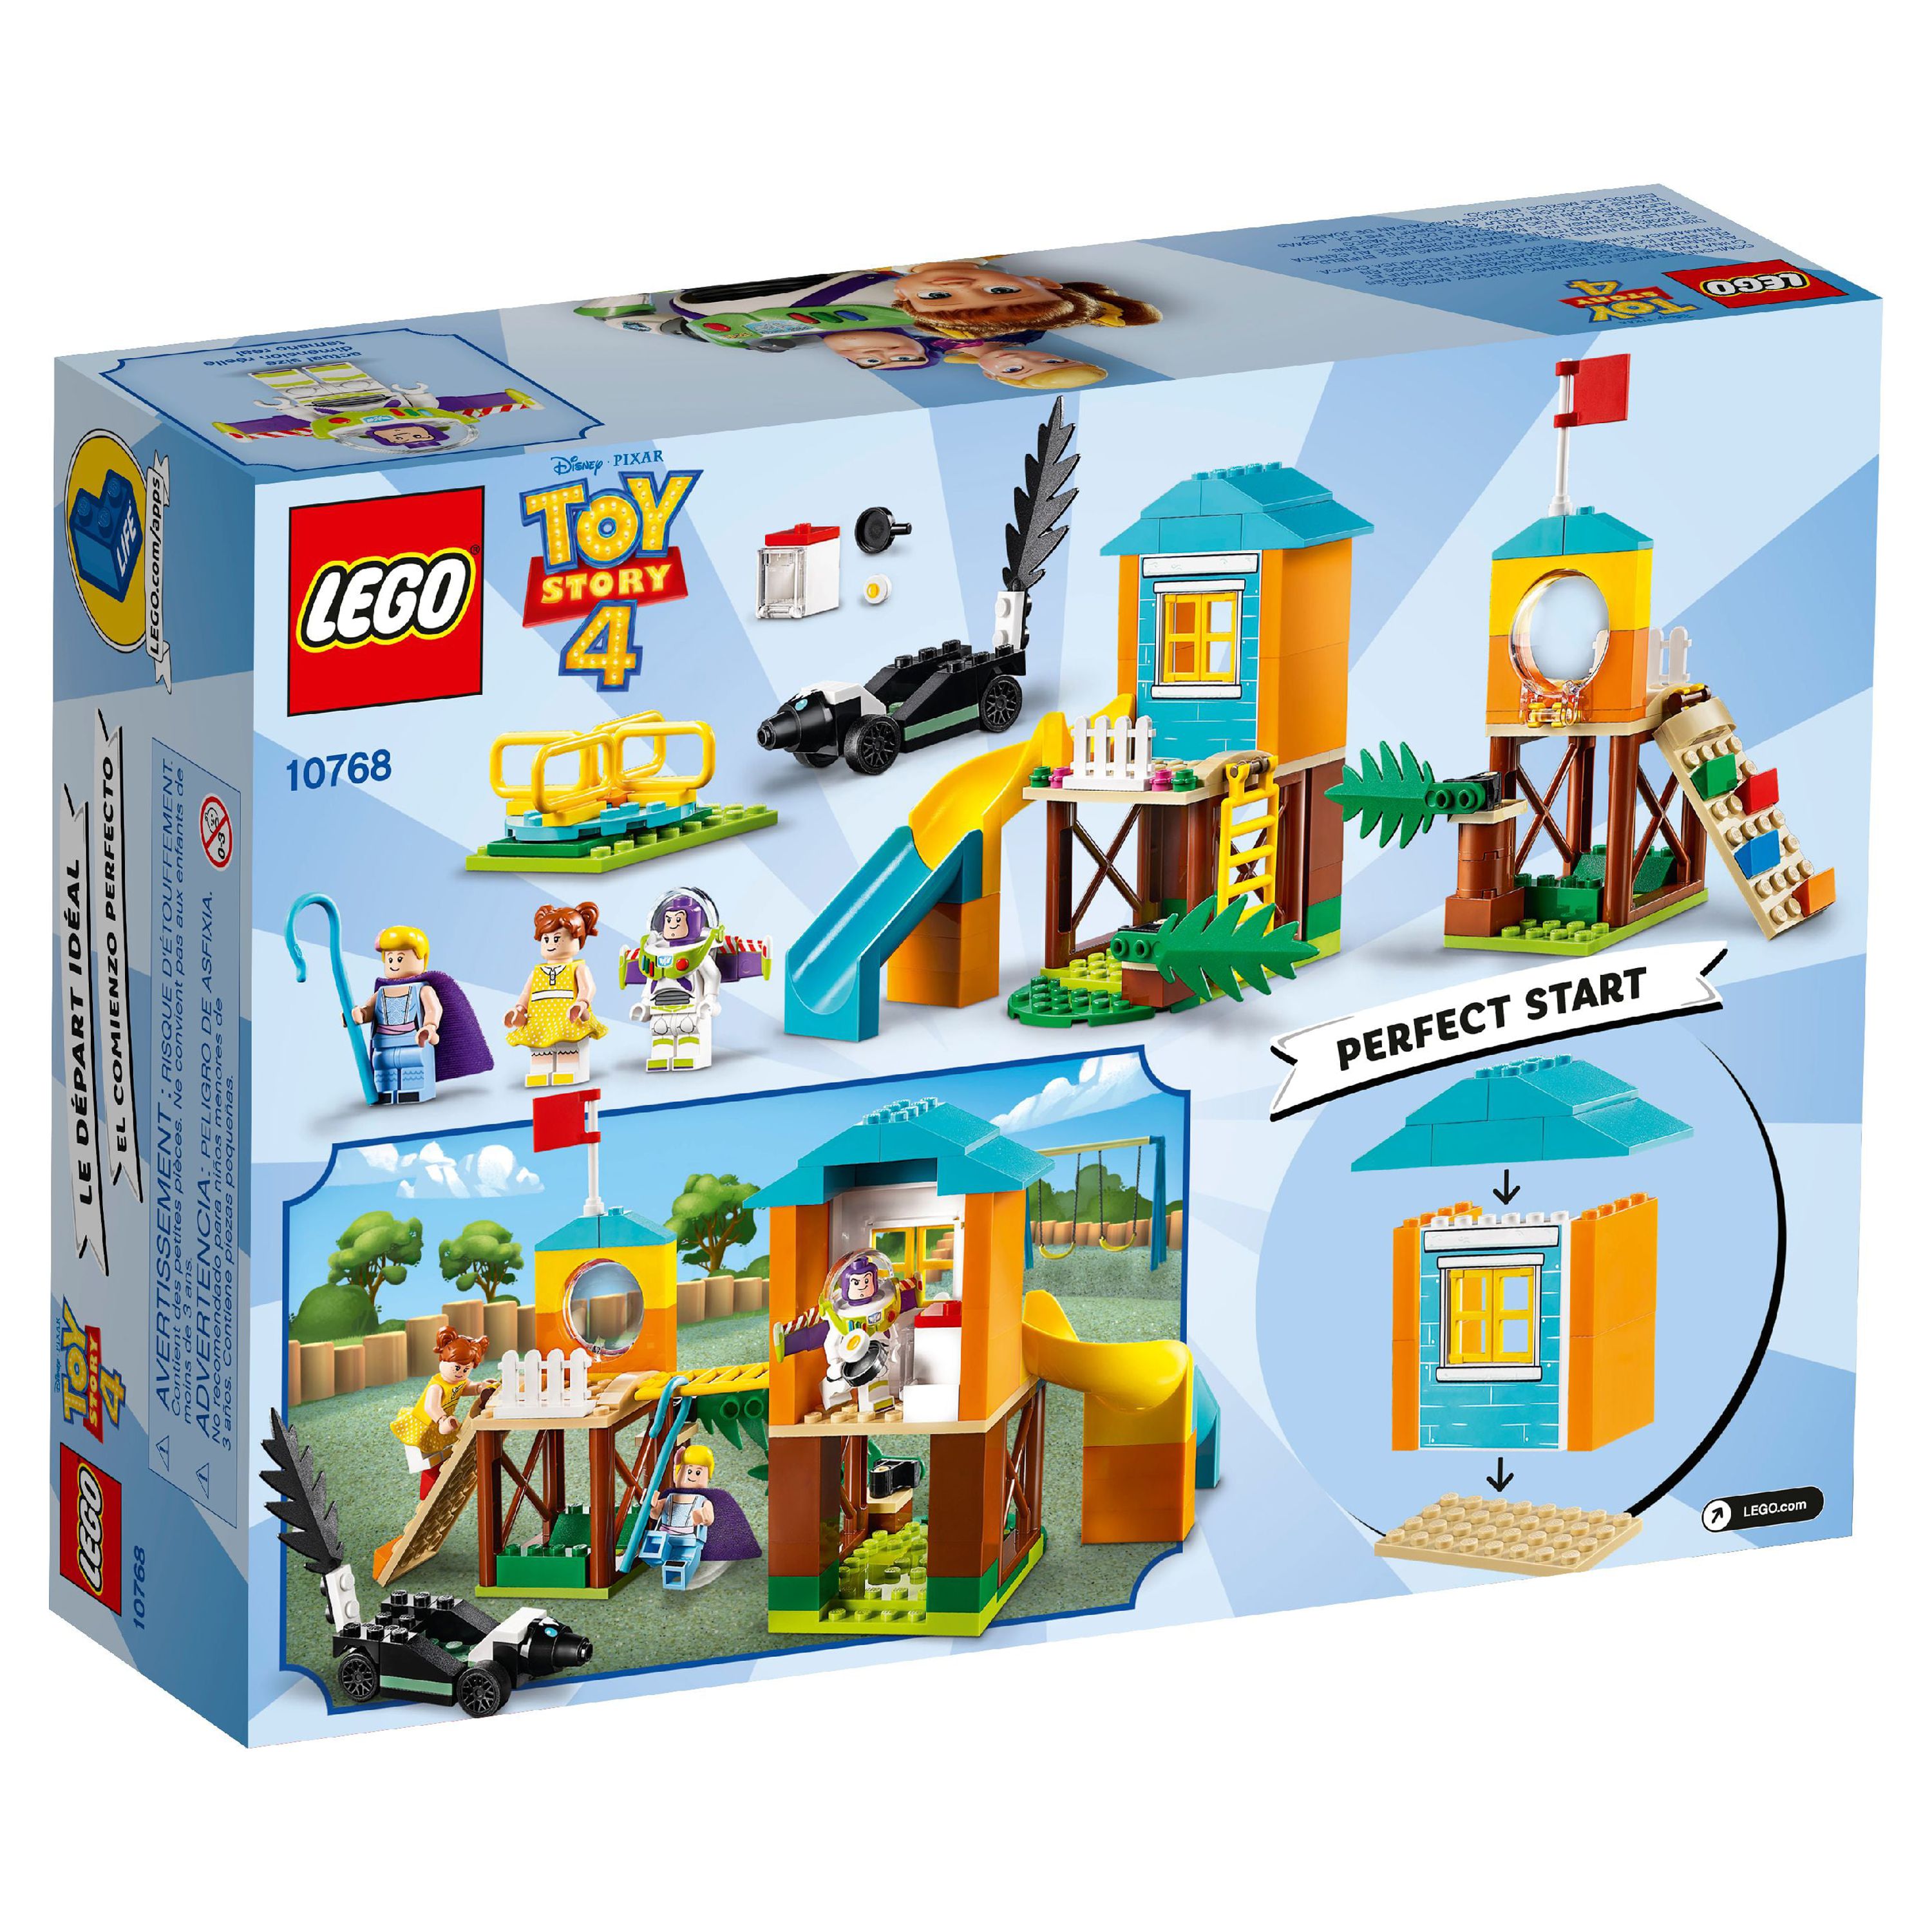 LEGO 4+ Toy Story 4 Buzz & Bo Peep's Playground Adventure Building Set 10768 - image 5 of 7